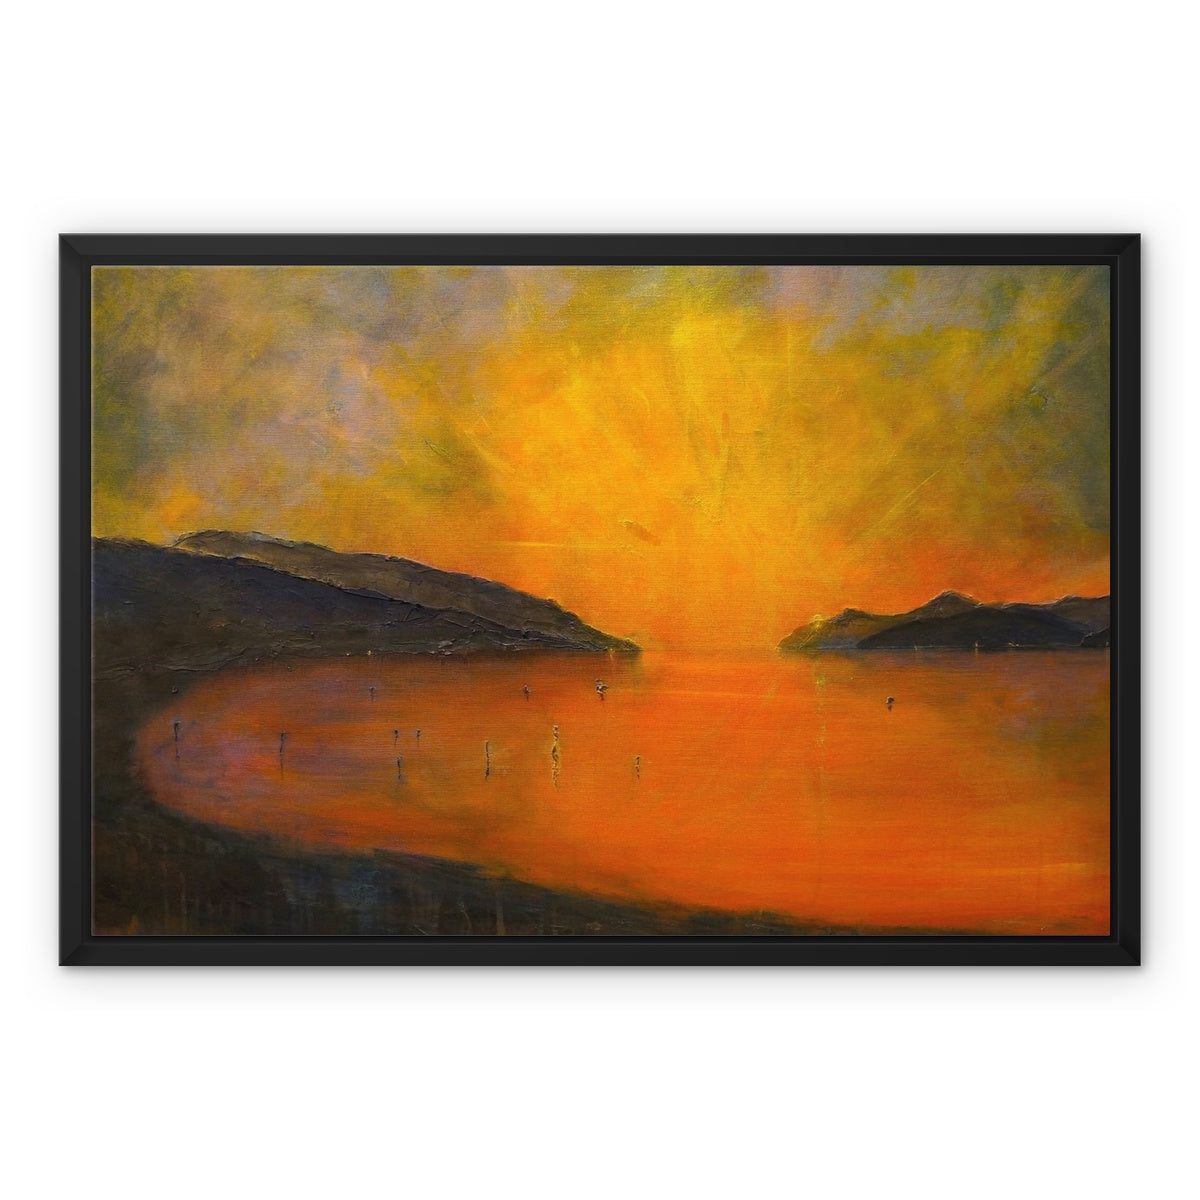 Loch Ness Sunset Painting | Framed Canvas From Scotland-Floating Framed Canvas Prints-Scottish Lochs & Mountains Art Gallery-24"x18"-Black Frame-Paintings, Prints, Homeware, Art Gifts From Scotland By Scottish Artist Kevin Hunter